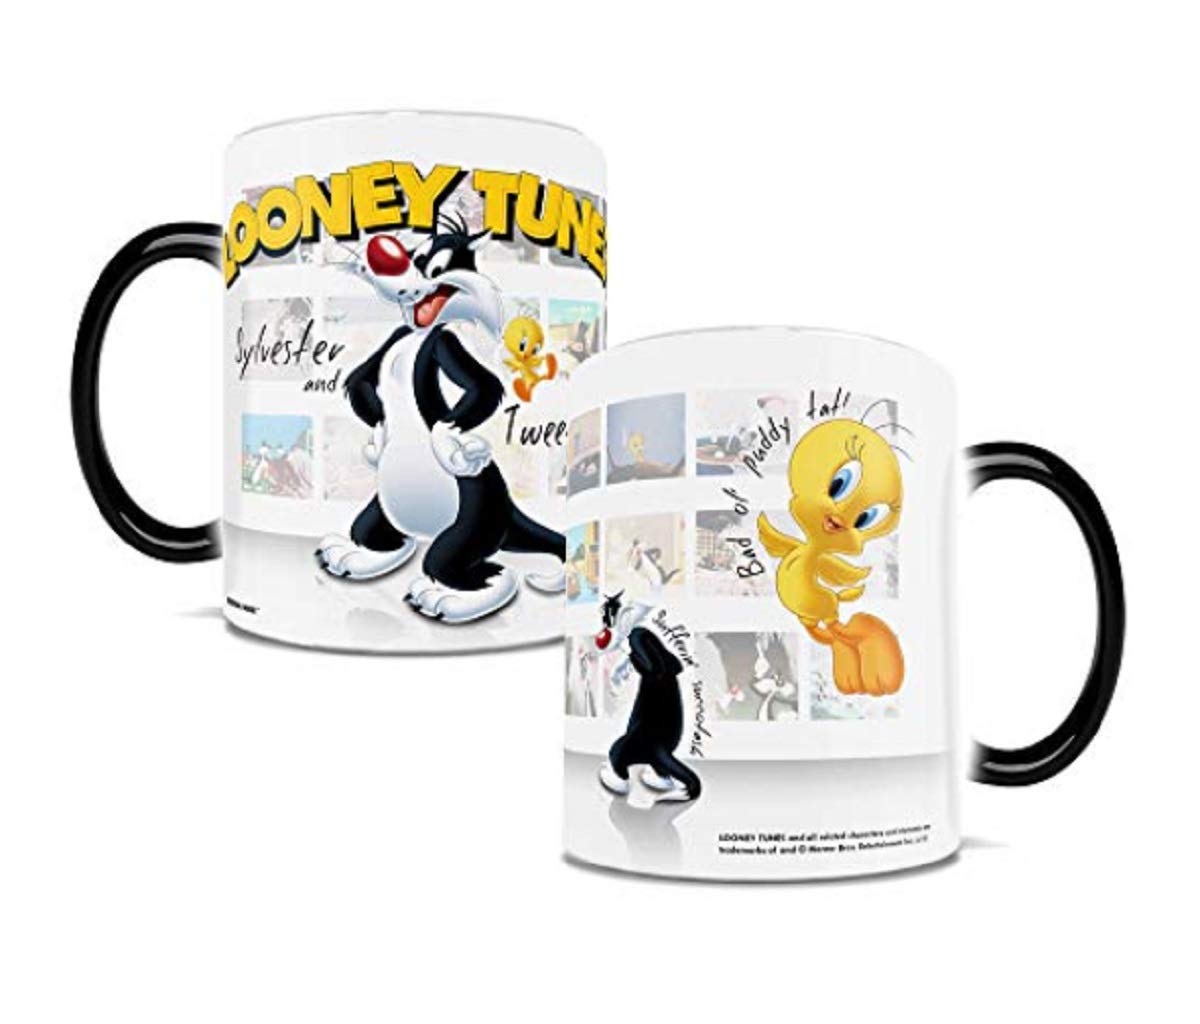 Morphing Mugs Looney Tunes (Sylvester and Tweety) Ceramic Mug, Black